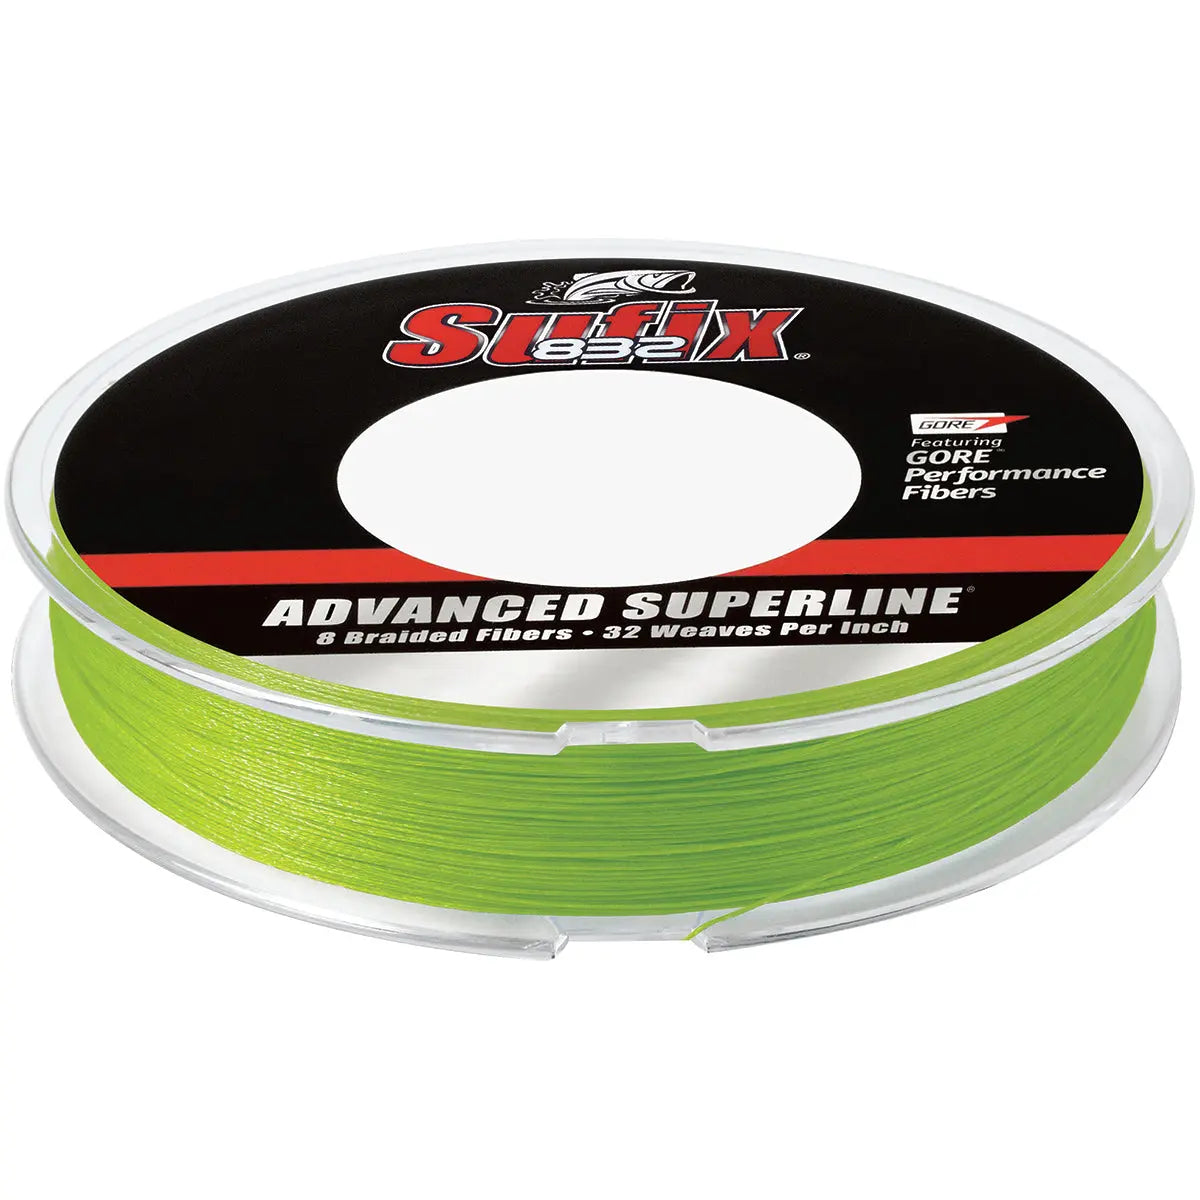 Sufix 150 Yard 832 Advanced Superline Braid Fishing Line - 6 lb. - Neon Lime Sufix